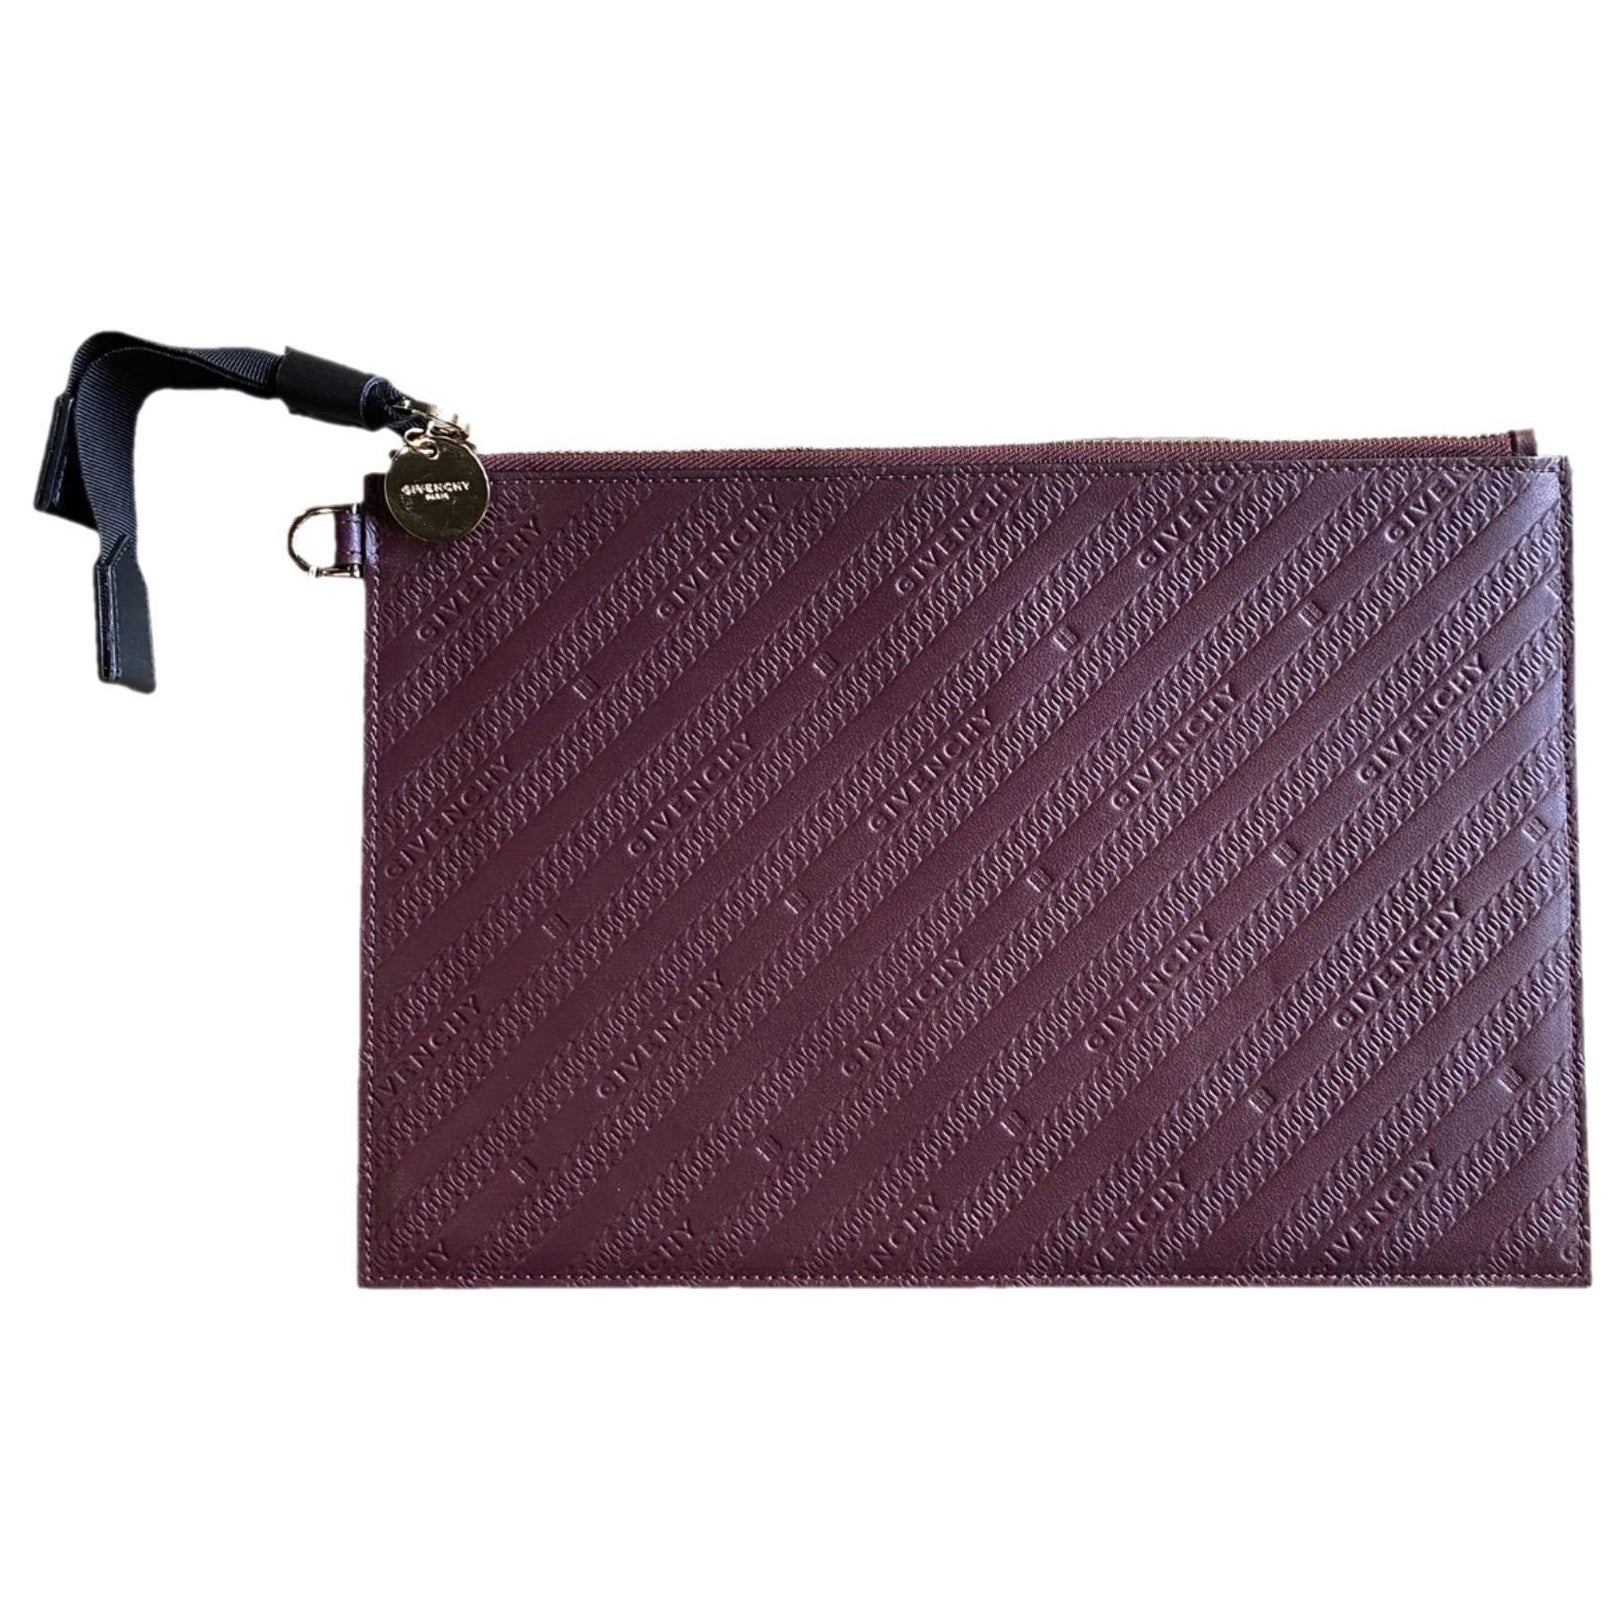 Givenchy burgundi leather Clutch Bag For Sale